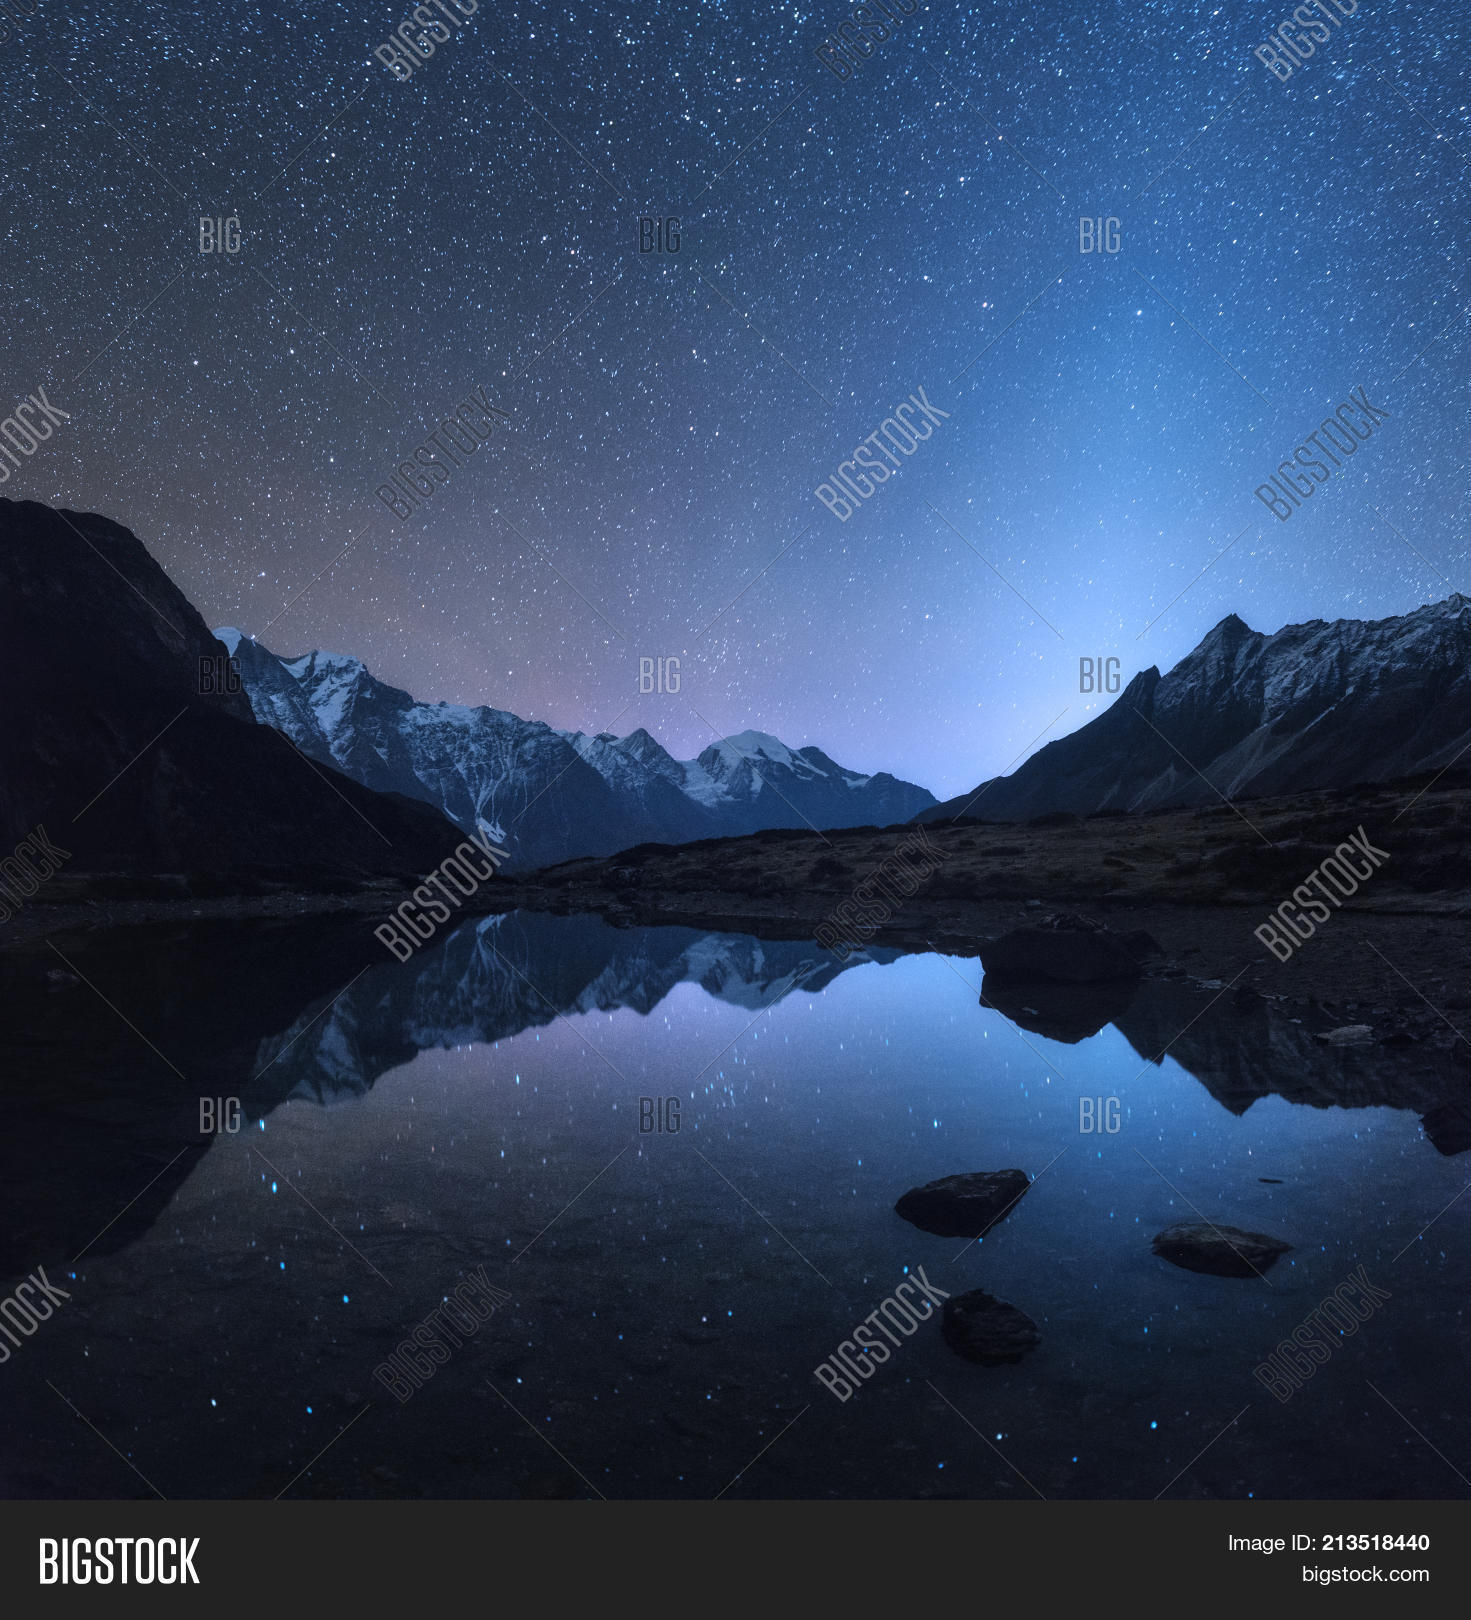 Amazing Night Scene Mountains Lake Image & Photo | Bigstock